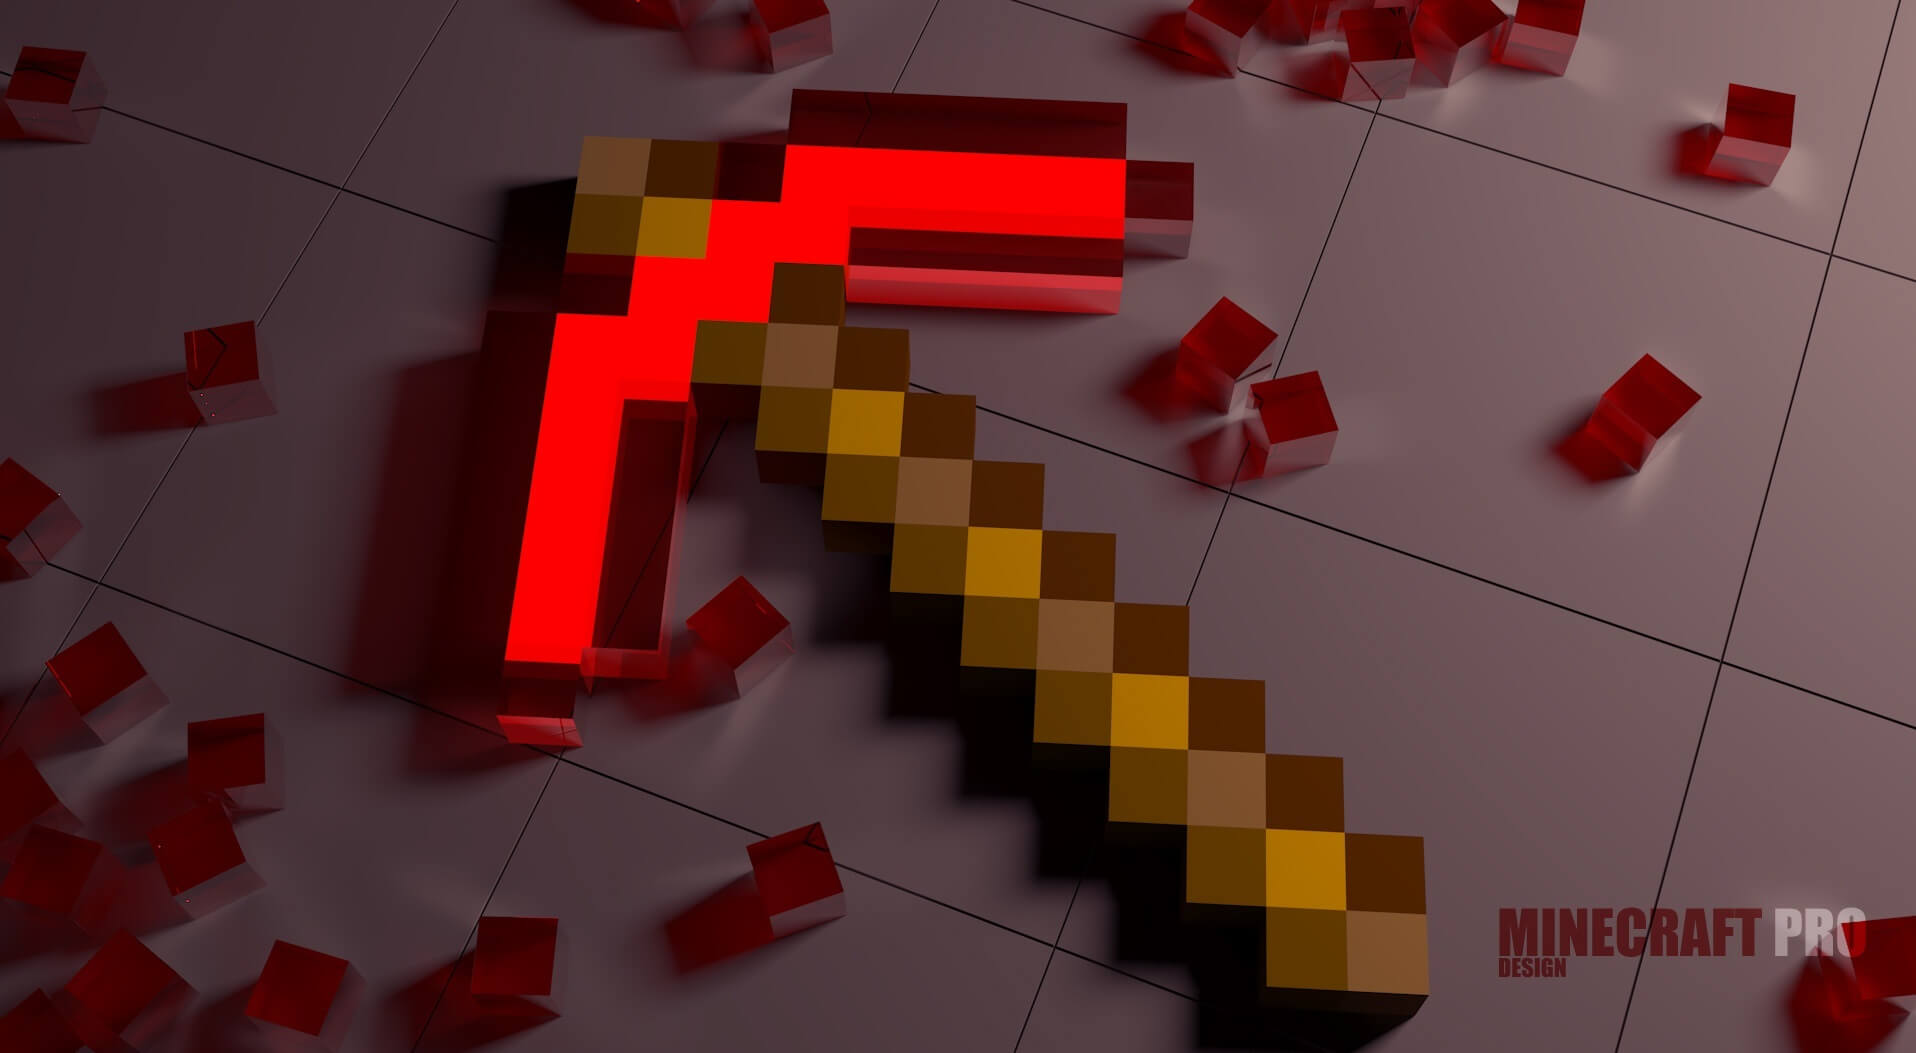 Minecraft——Forge1.16.5模组开发（36.2.20）——(3)第一个实体方块